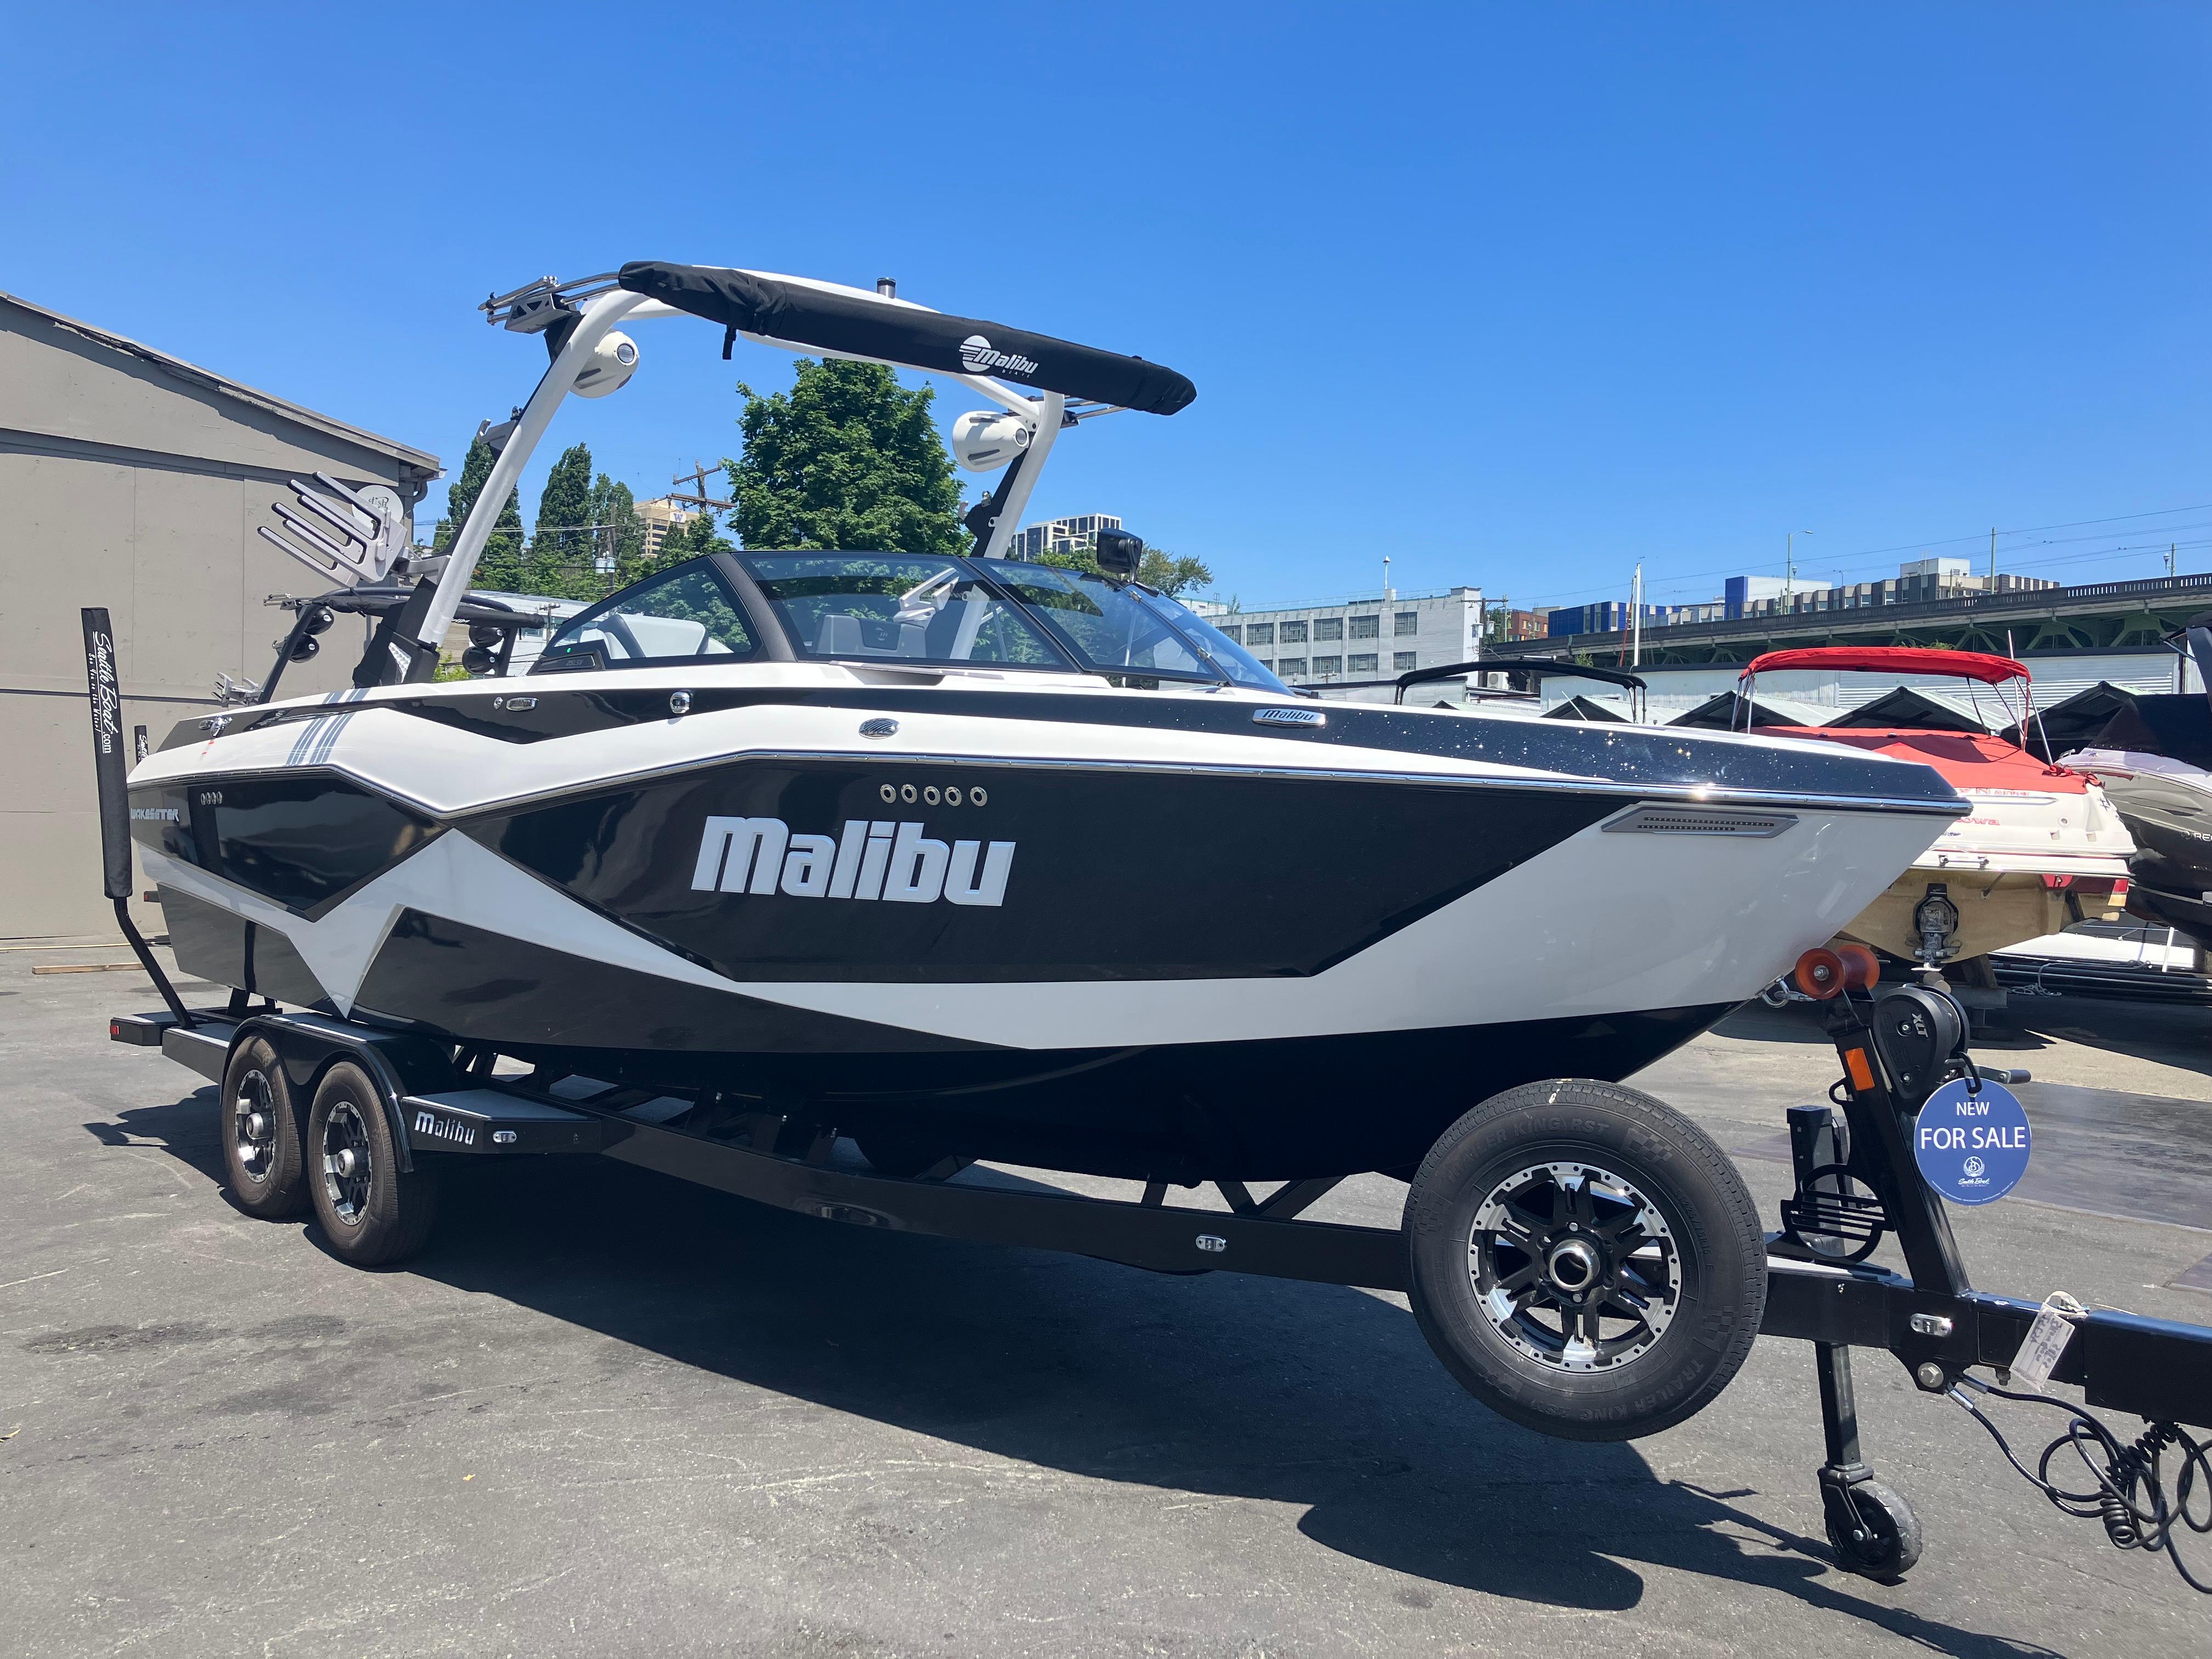 2022 Malibu 25 LSV